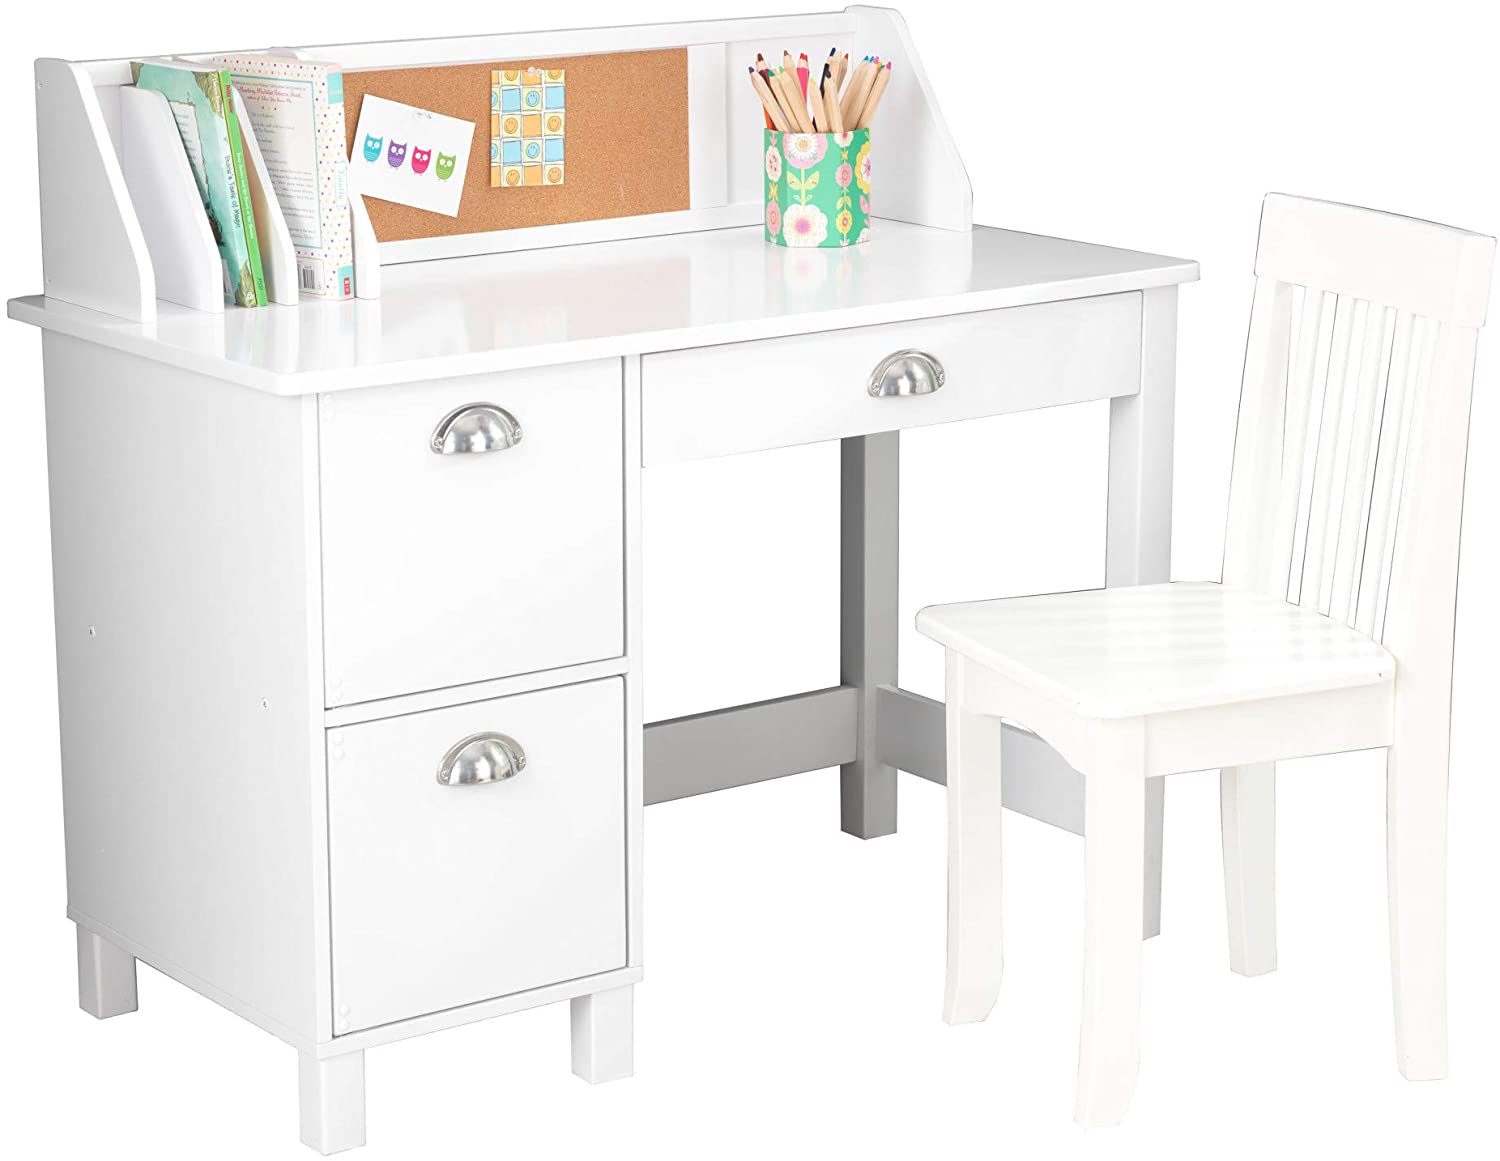 KidKraft Adjustable Organizing Children’s Desk